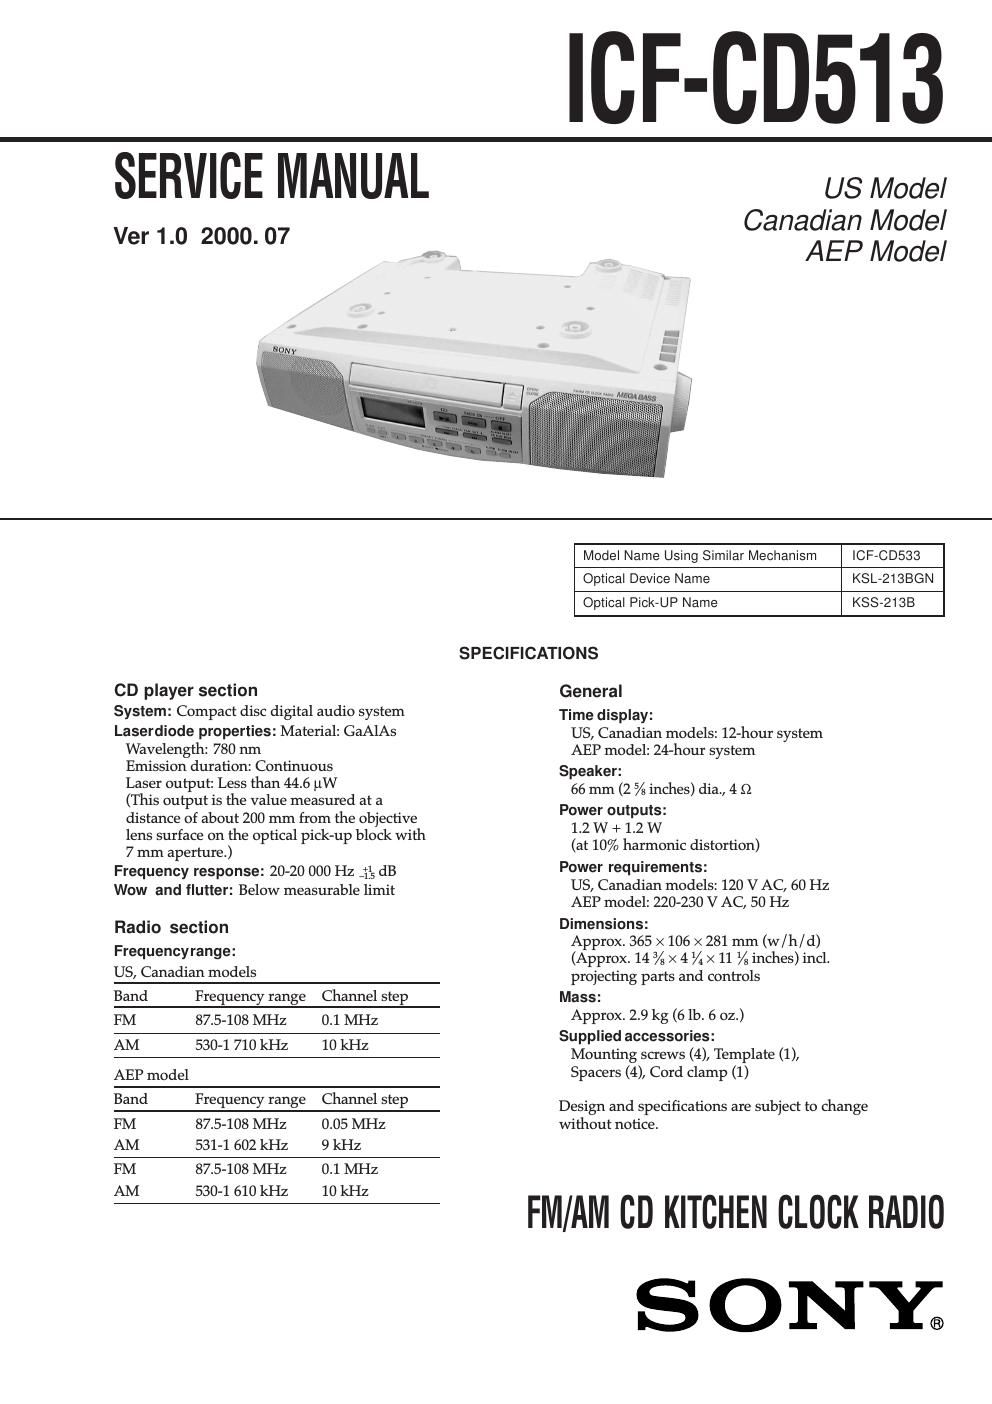 sony icf cd 513 service manual